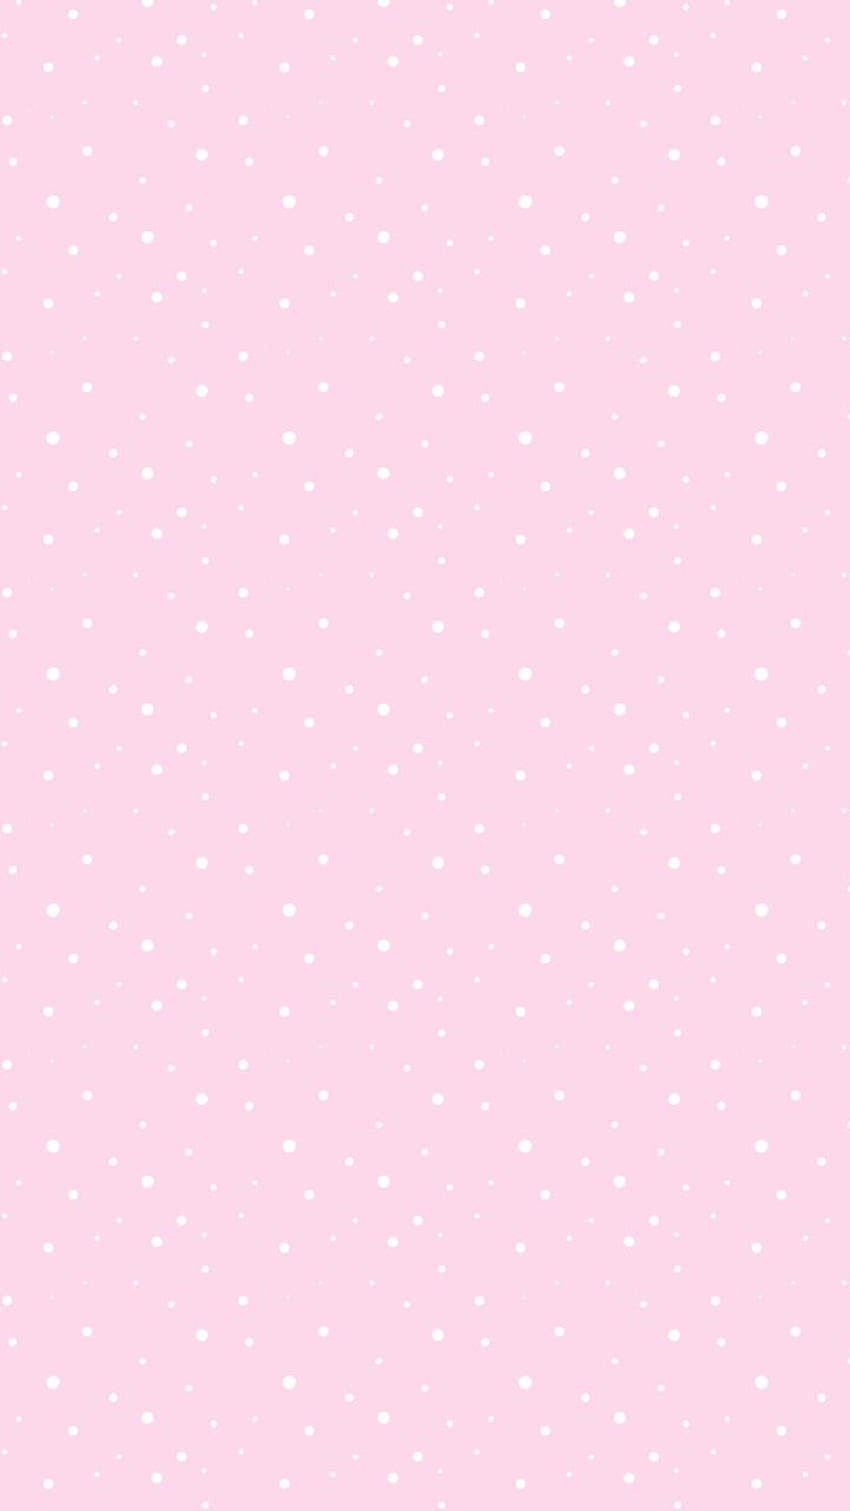 pattern,art, background, beautiful, beauty, colorful, colour, design, dots, iphone, kawaii, pastel, pattern, patterns, pink, polka dot, style, texture, we heart it, pink pattern, pink background, pastel pink, beautiful art, pastel color, kawaii pastel pink HD phone wallpaper